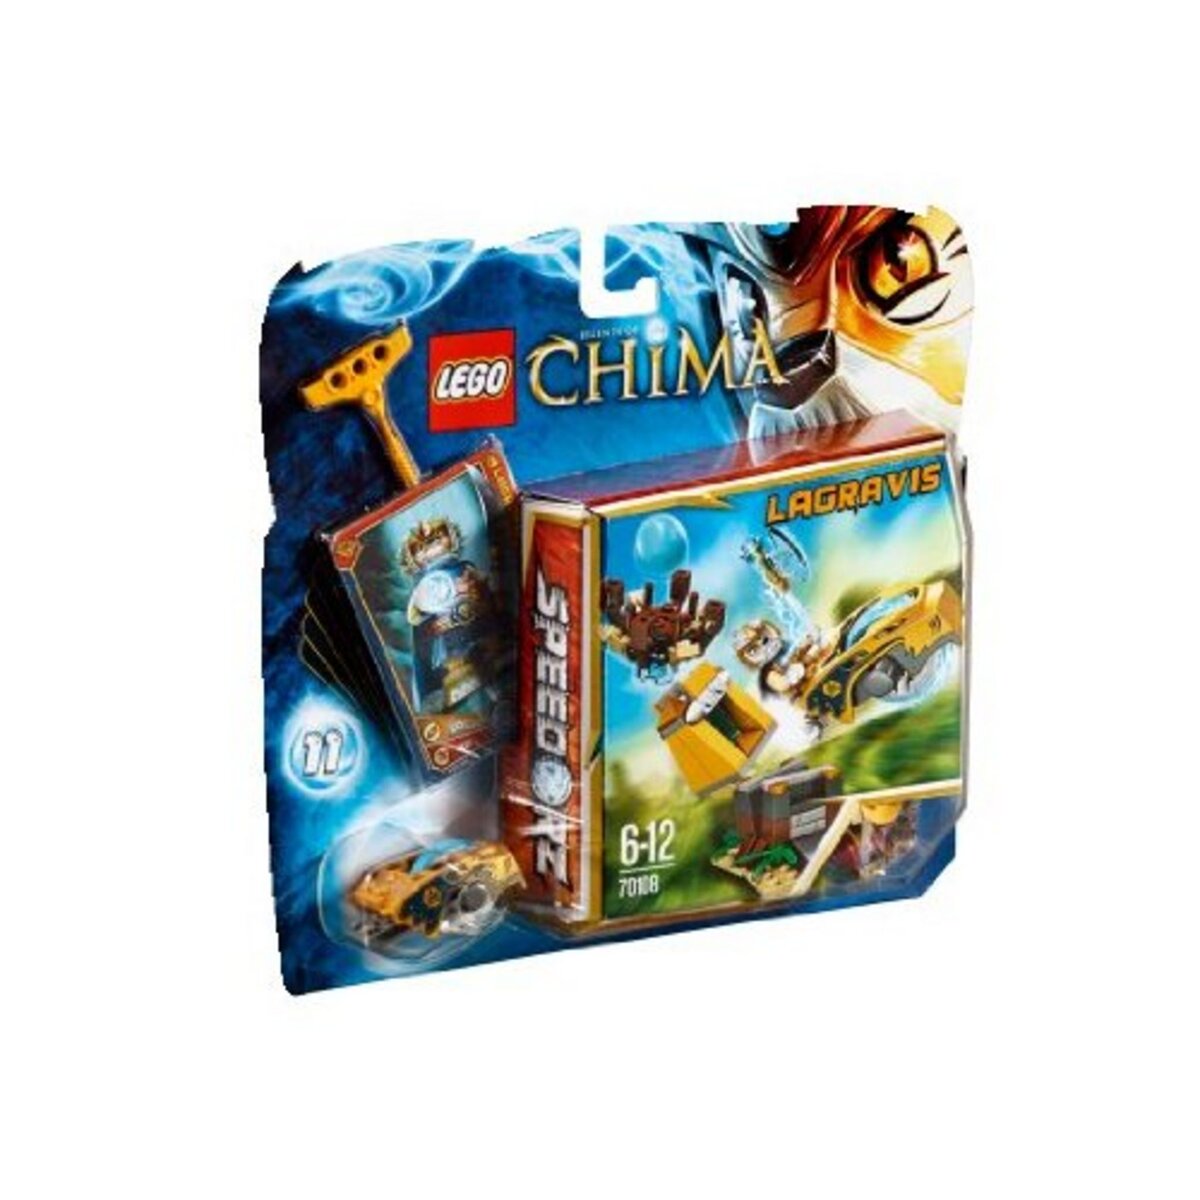 LEGO Legends of Chima 70108 - L'attaque du nid Royal